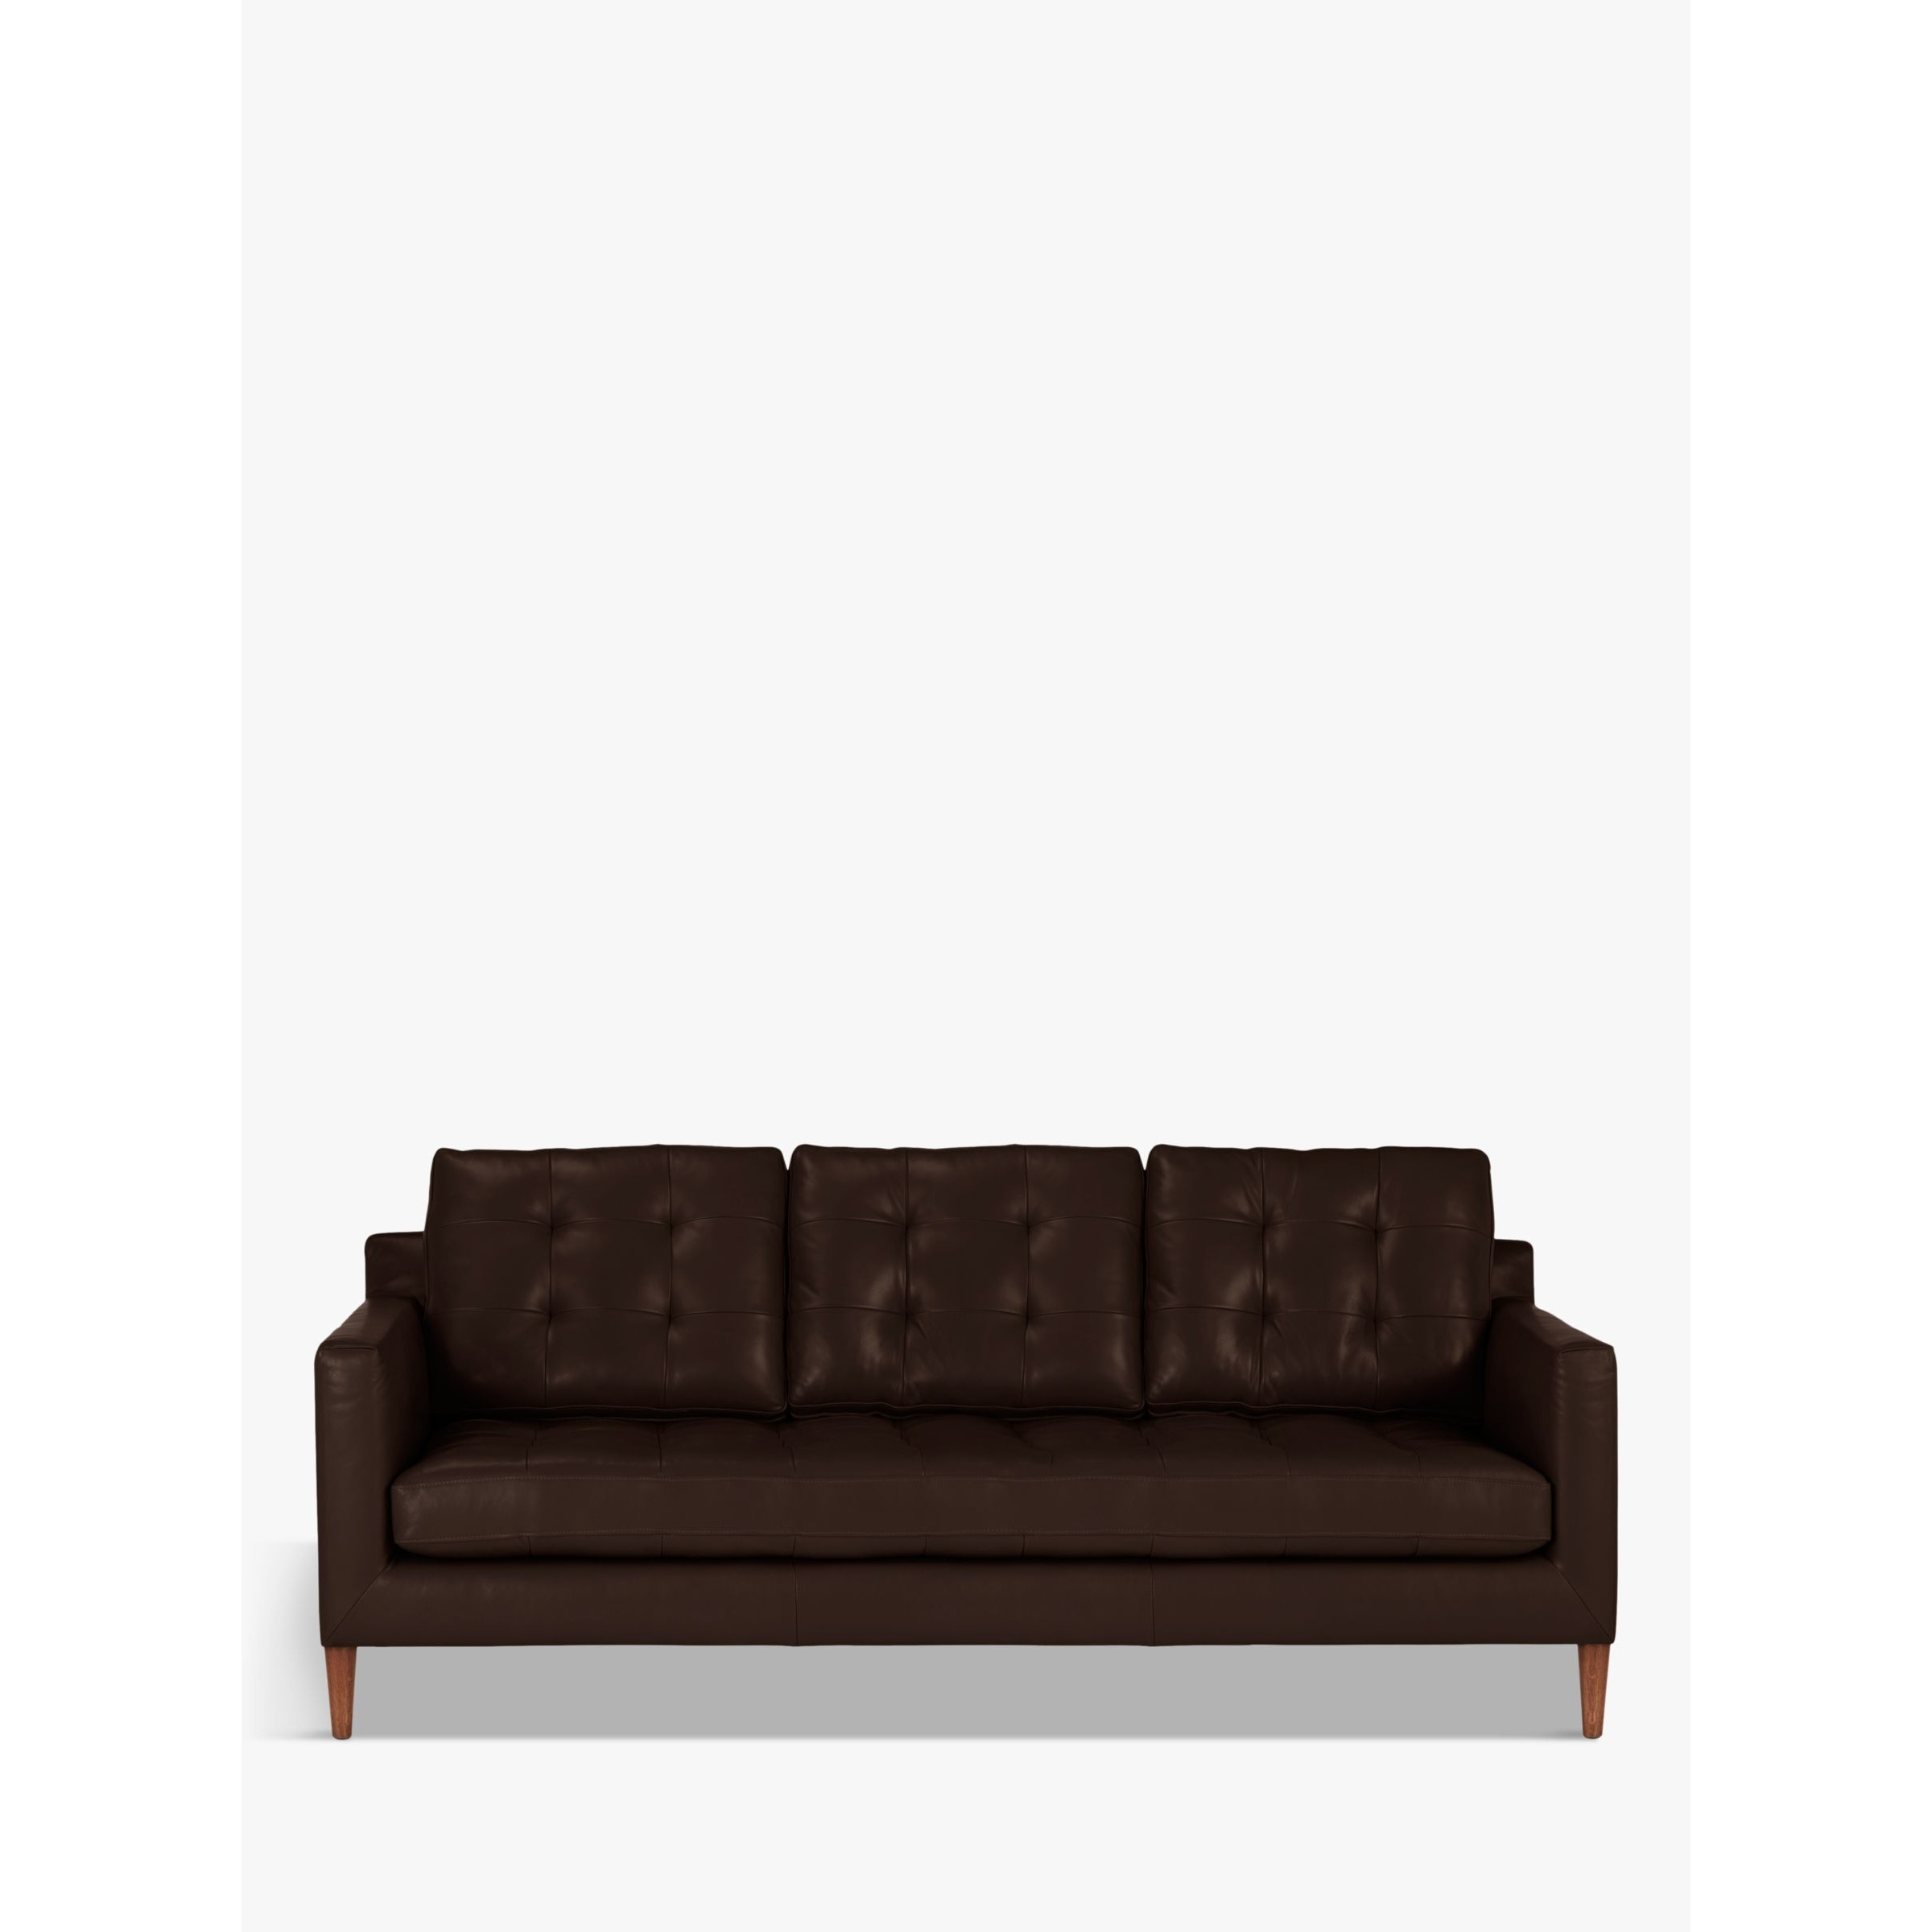 John Lewis Draper Large 3 Seater Leather Sofa, Dark Leg - image 1